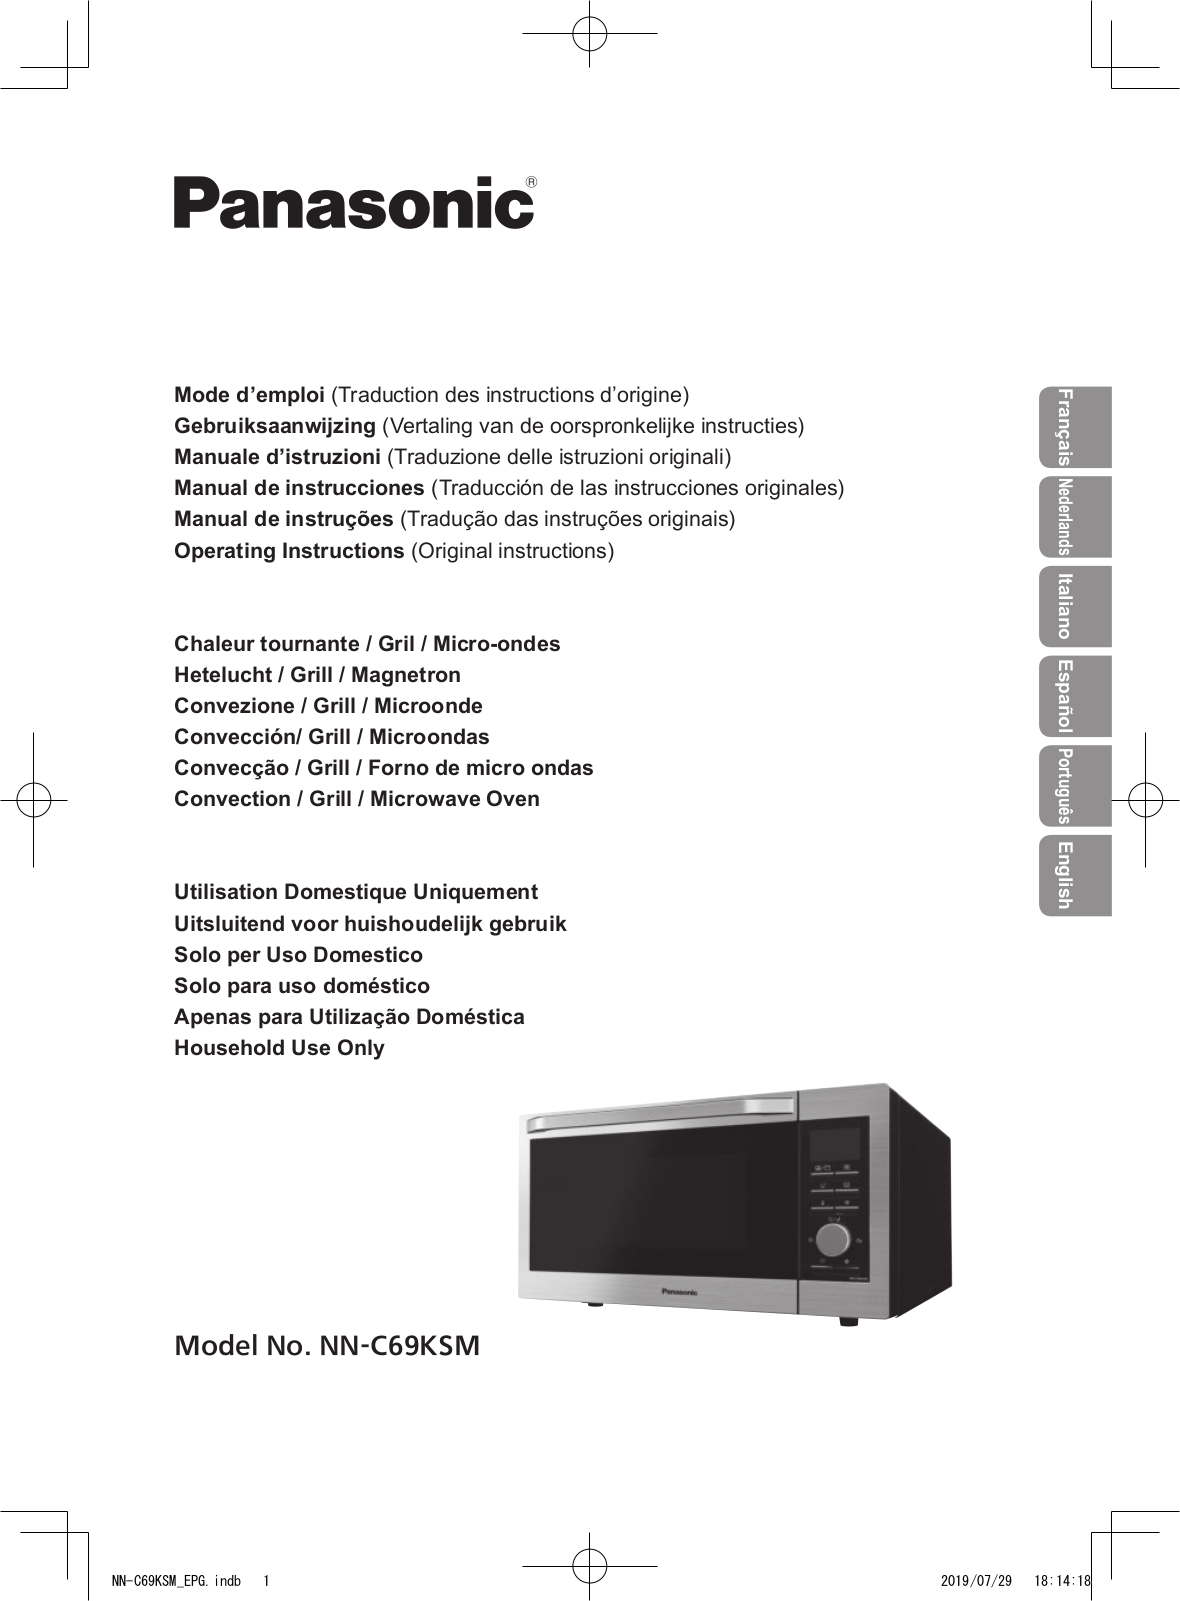 Panasonic NN-C69KSMEPG User manual